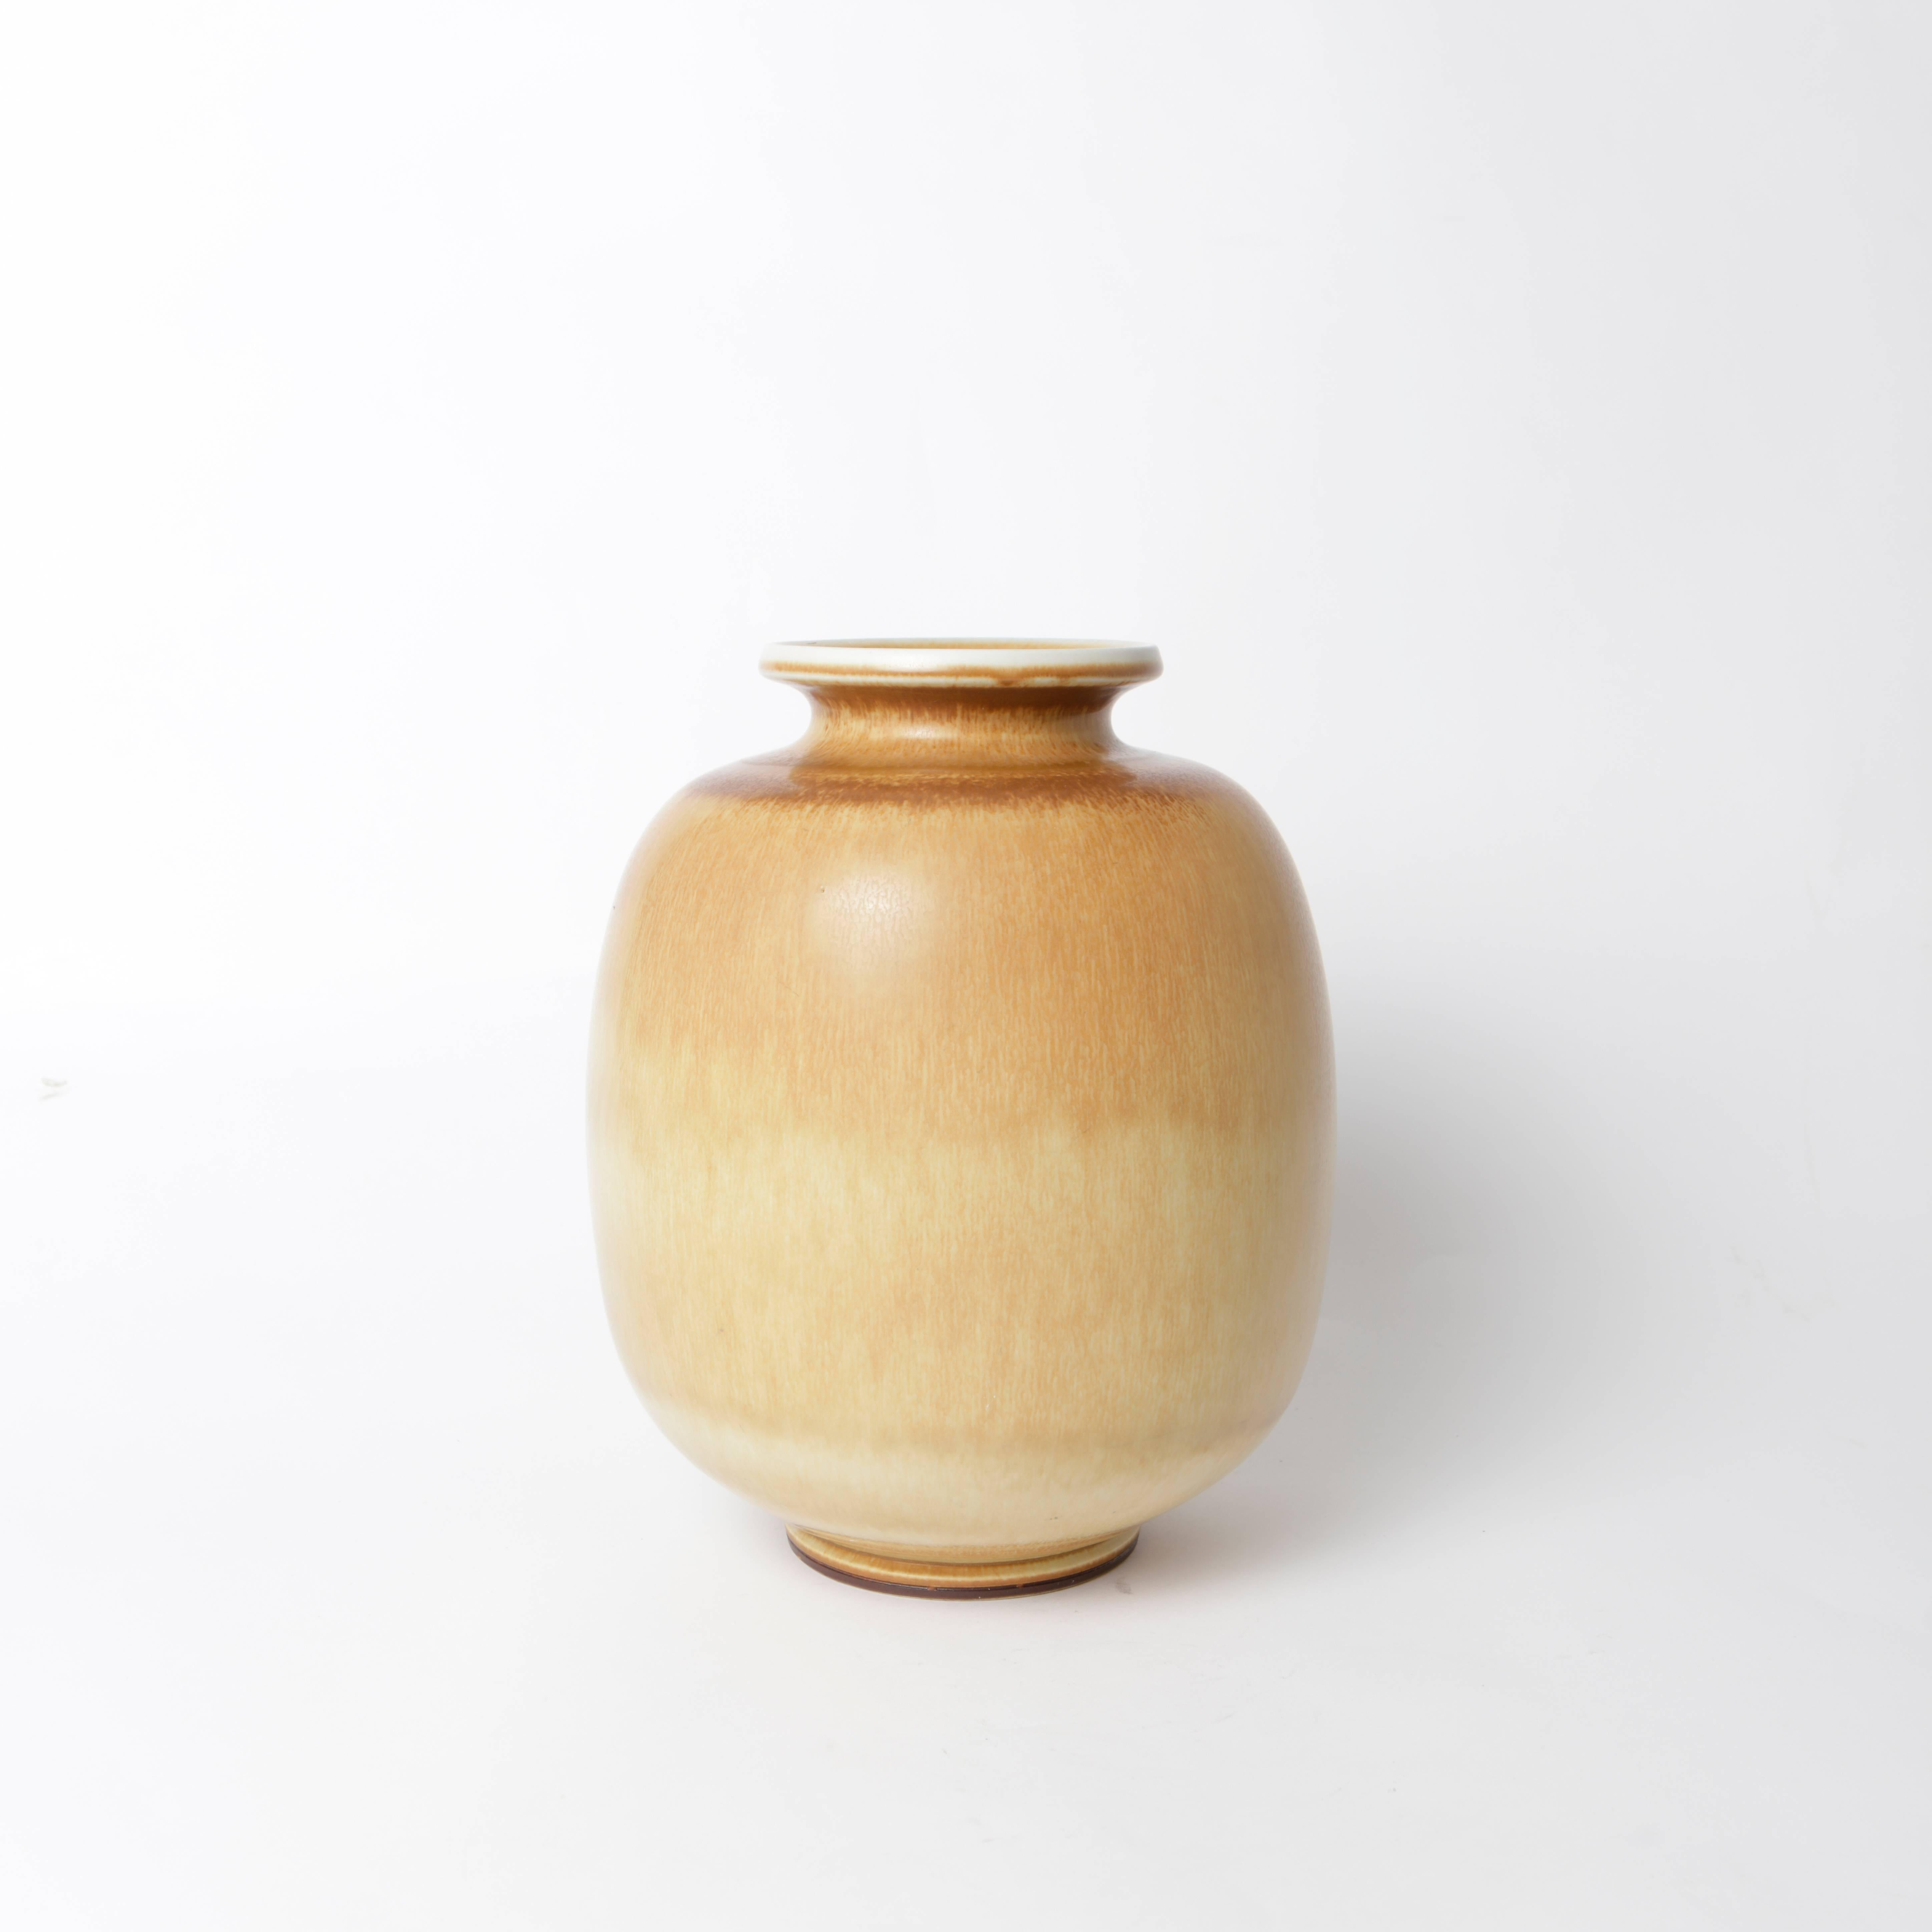 Unique stoneware vase by Berndt Friberg for Gustavsberg 1970 with harefur glaze.
Measures: Height 27.5cm/10.8